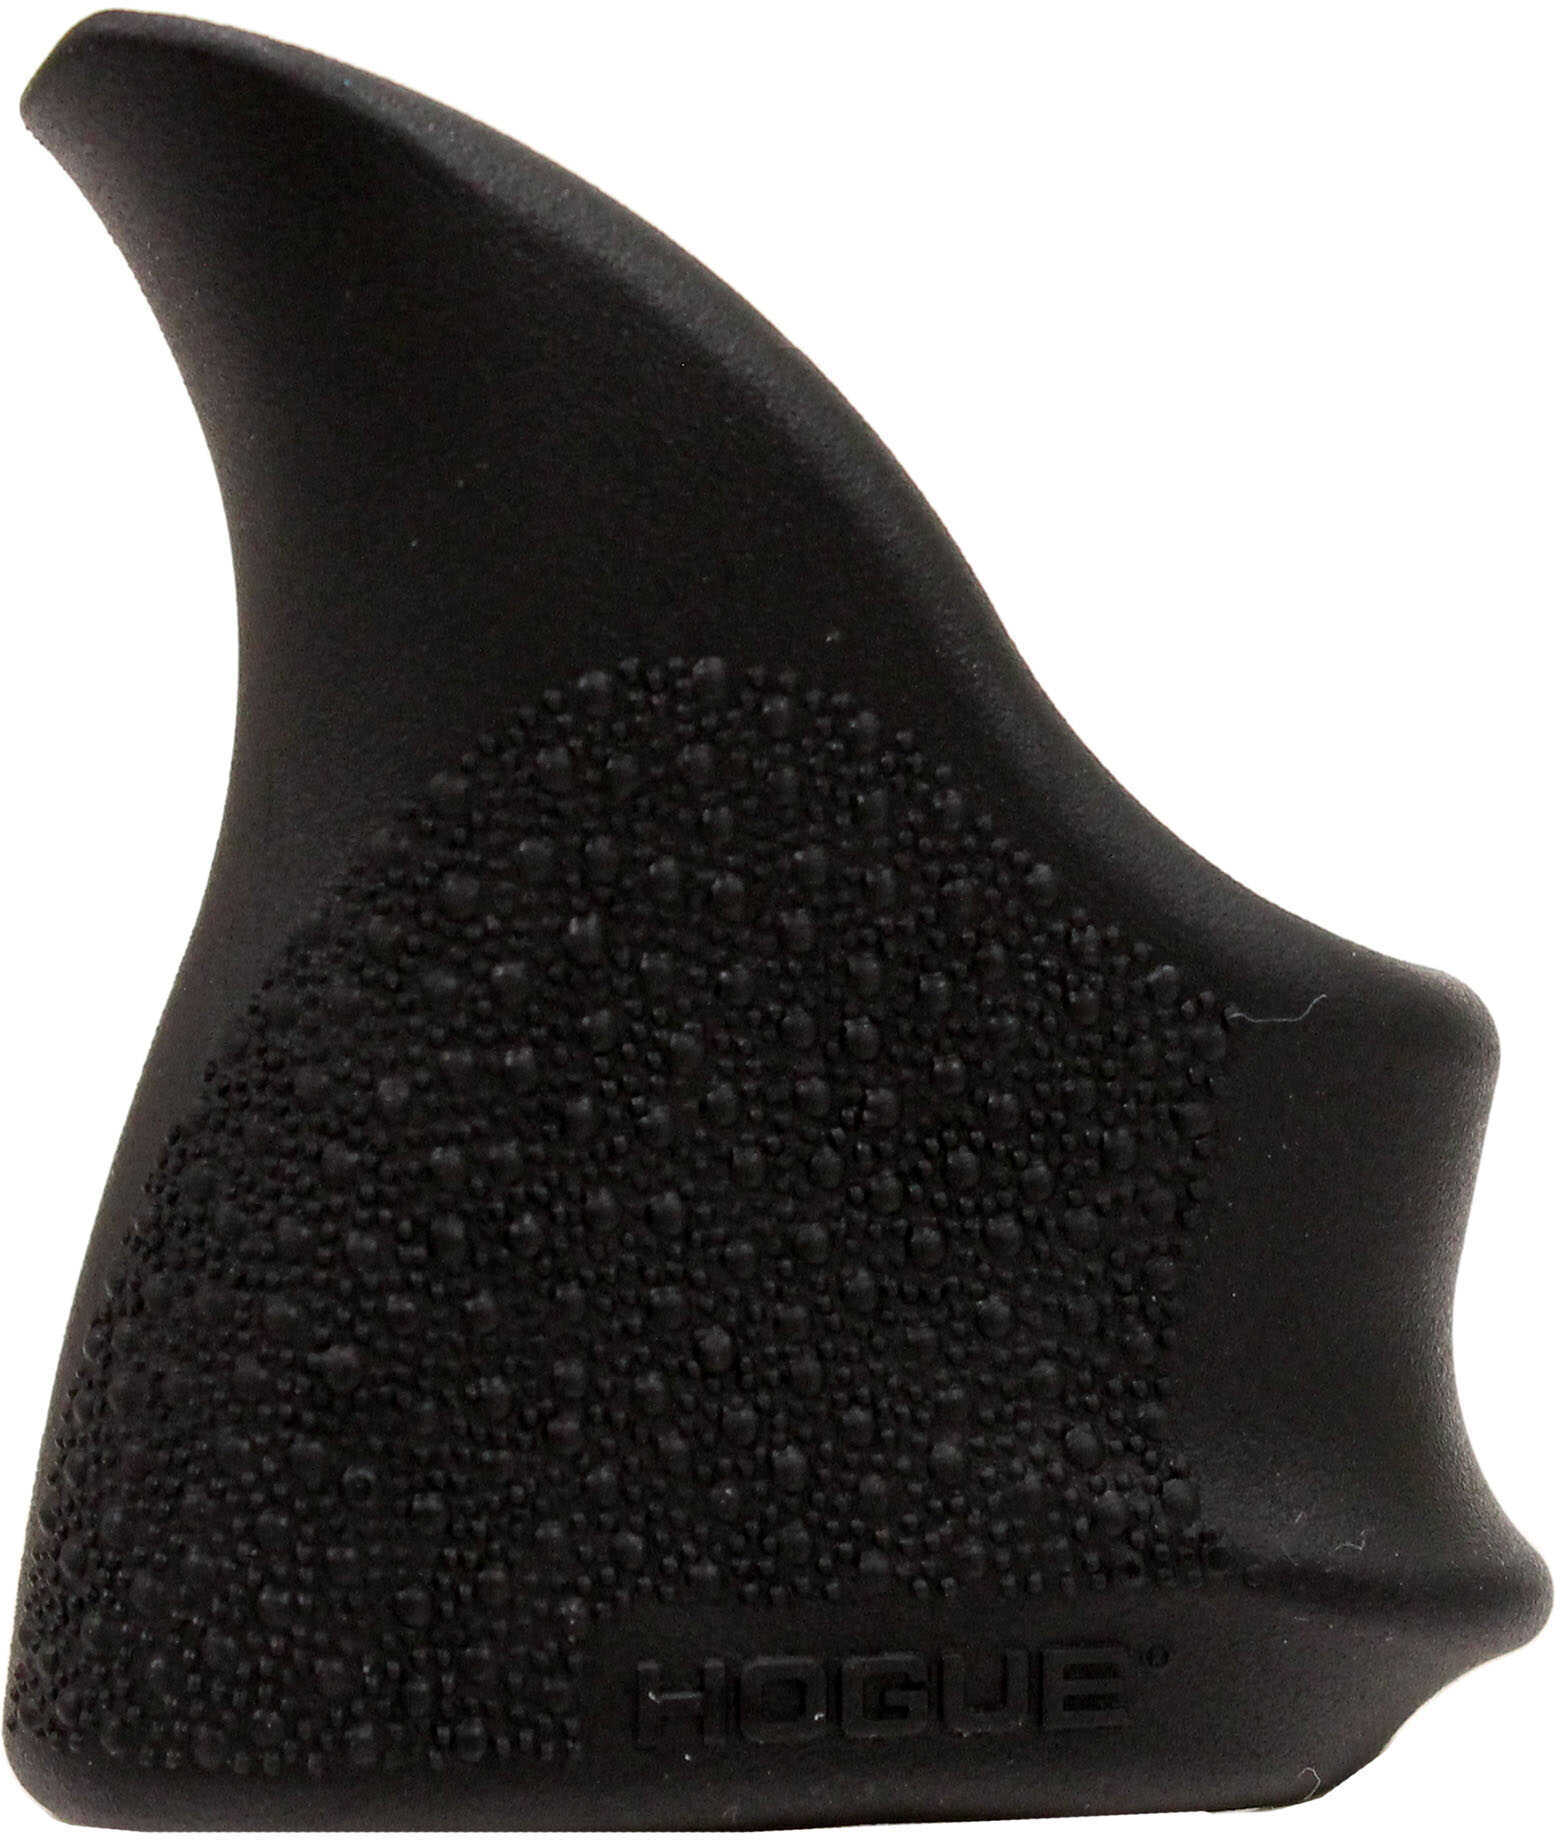 Hogue HandAll Beavertail Grip Sleeve For S&W Bodyguard 380/Taurus Tcp & Spectrum-Black